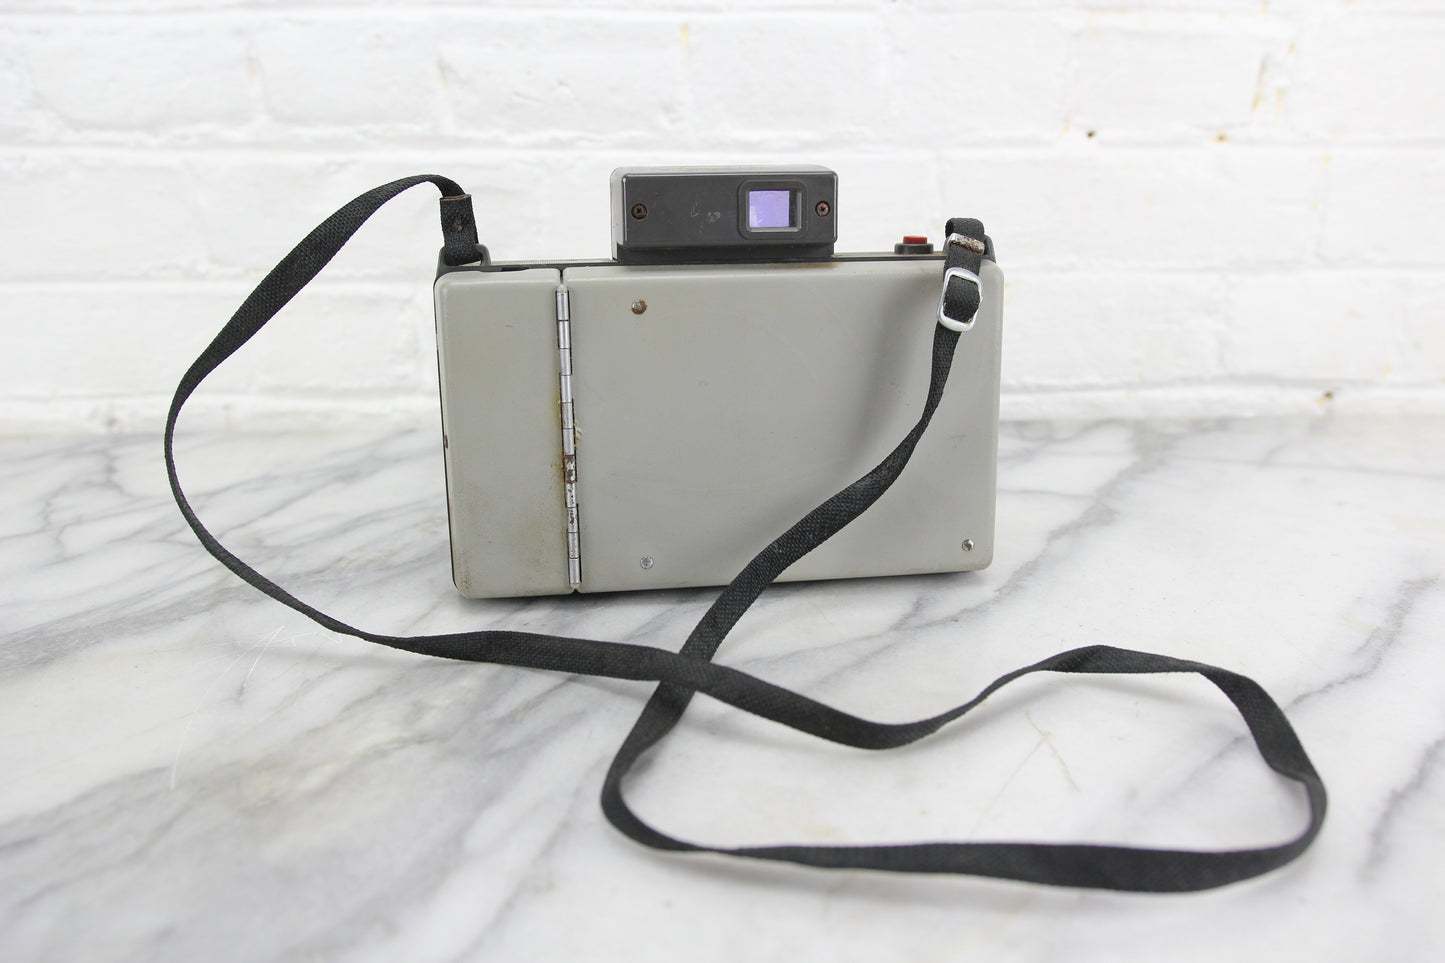 Polaroid Land Camera Automatic 104 Folding Instant Camera